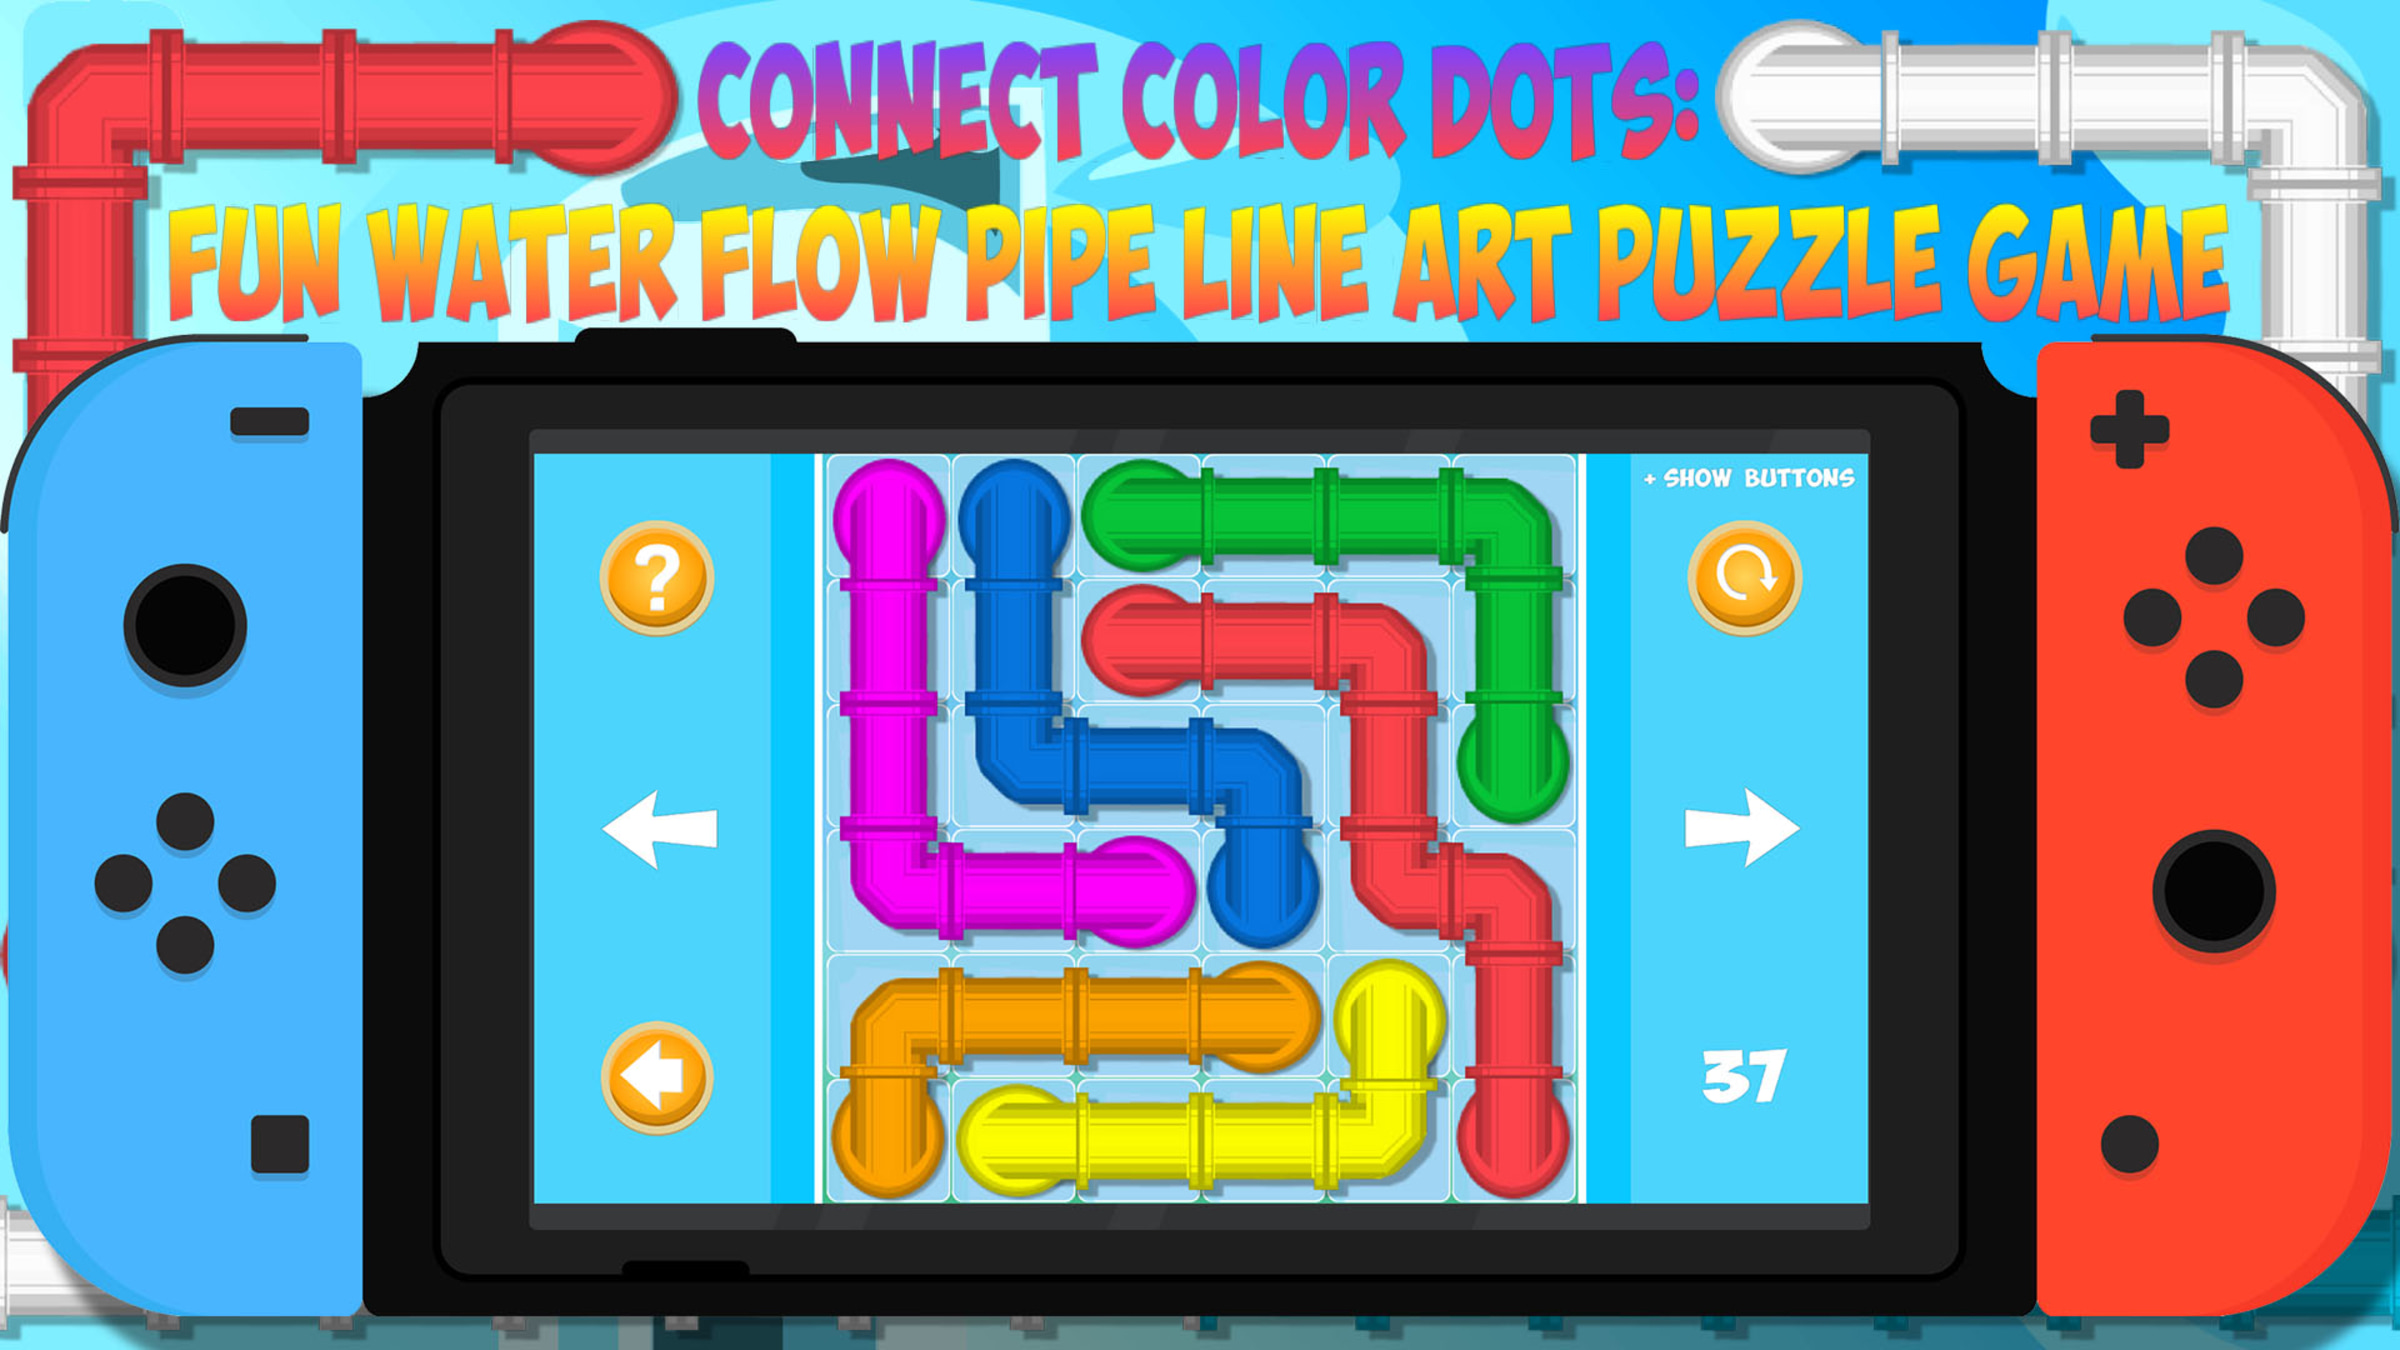 Connect Color Dots: Water Flow Pipe Line Art Puzzle Game para Nintendo Switch - Sitio oficial de Nintendo